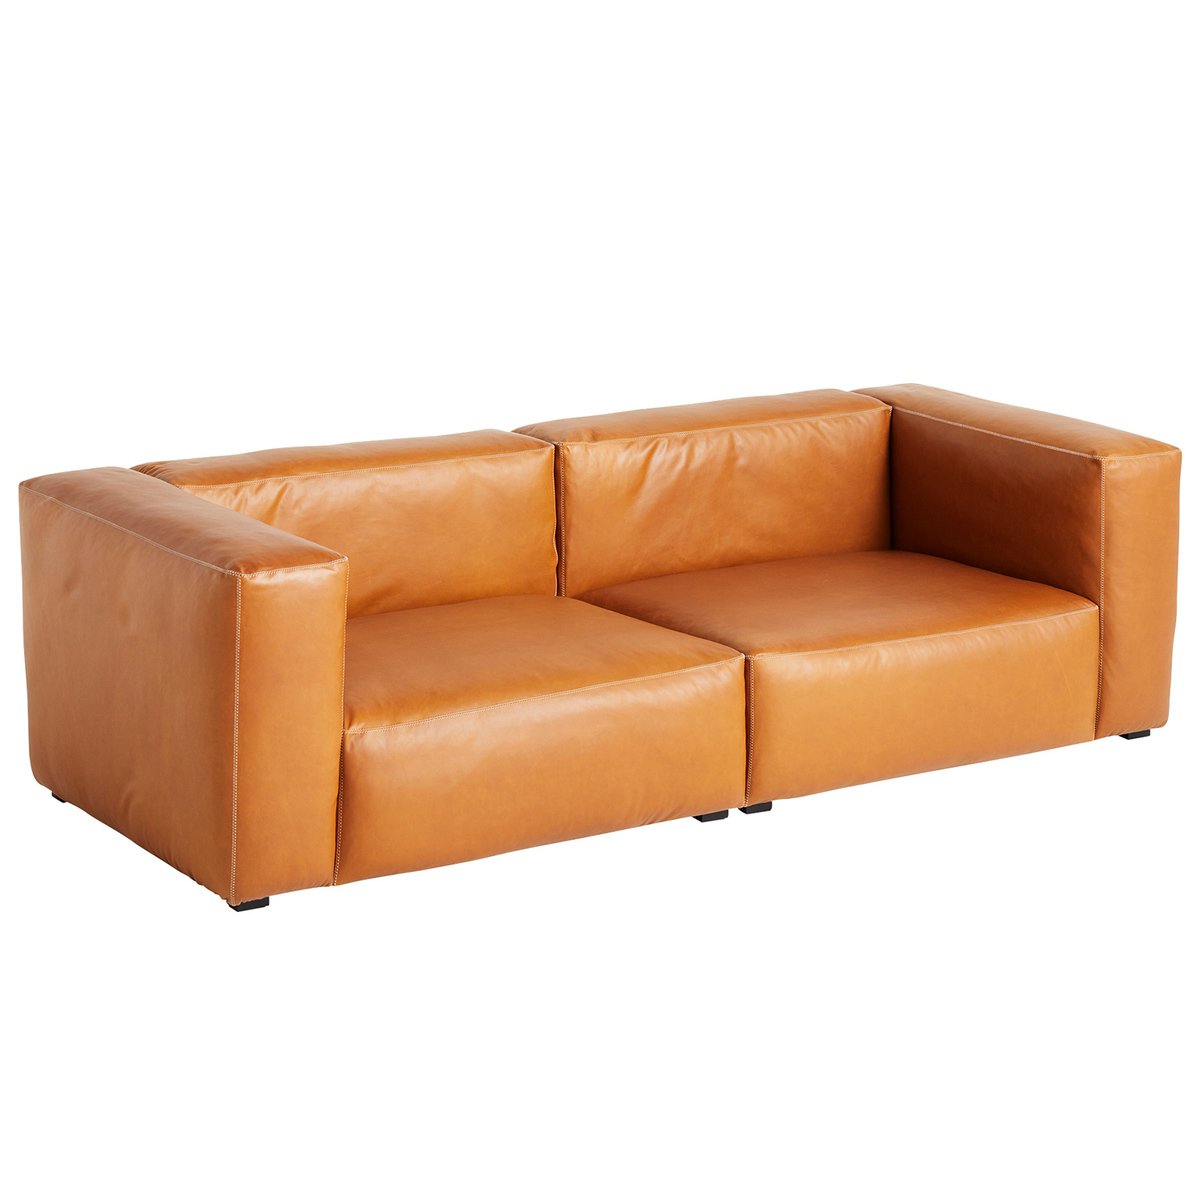 HAY Mags Soft sohva 2,5-ist/238 cm, korkea käsinoja, Sense 250 nahka